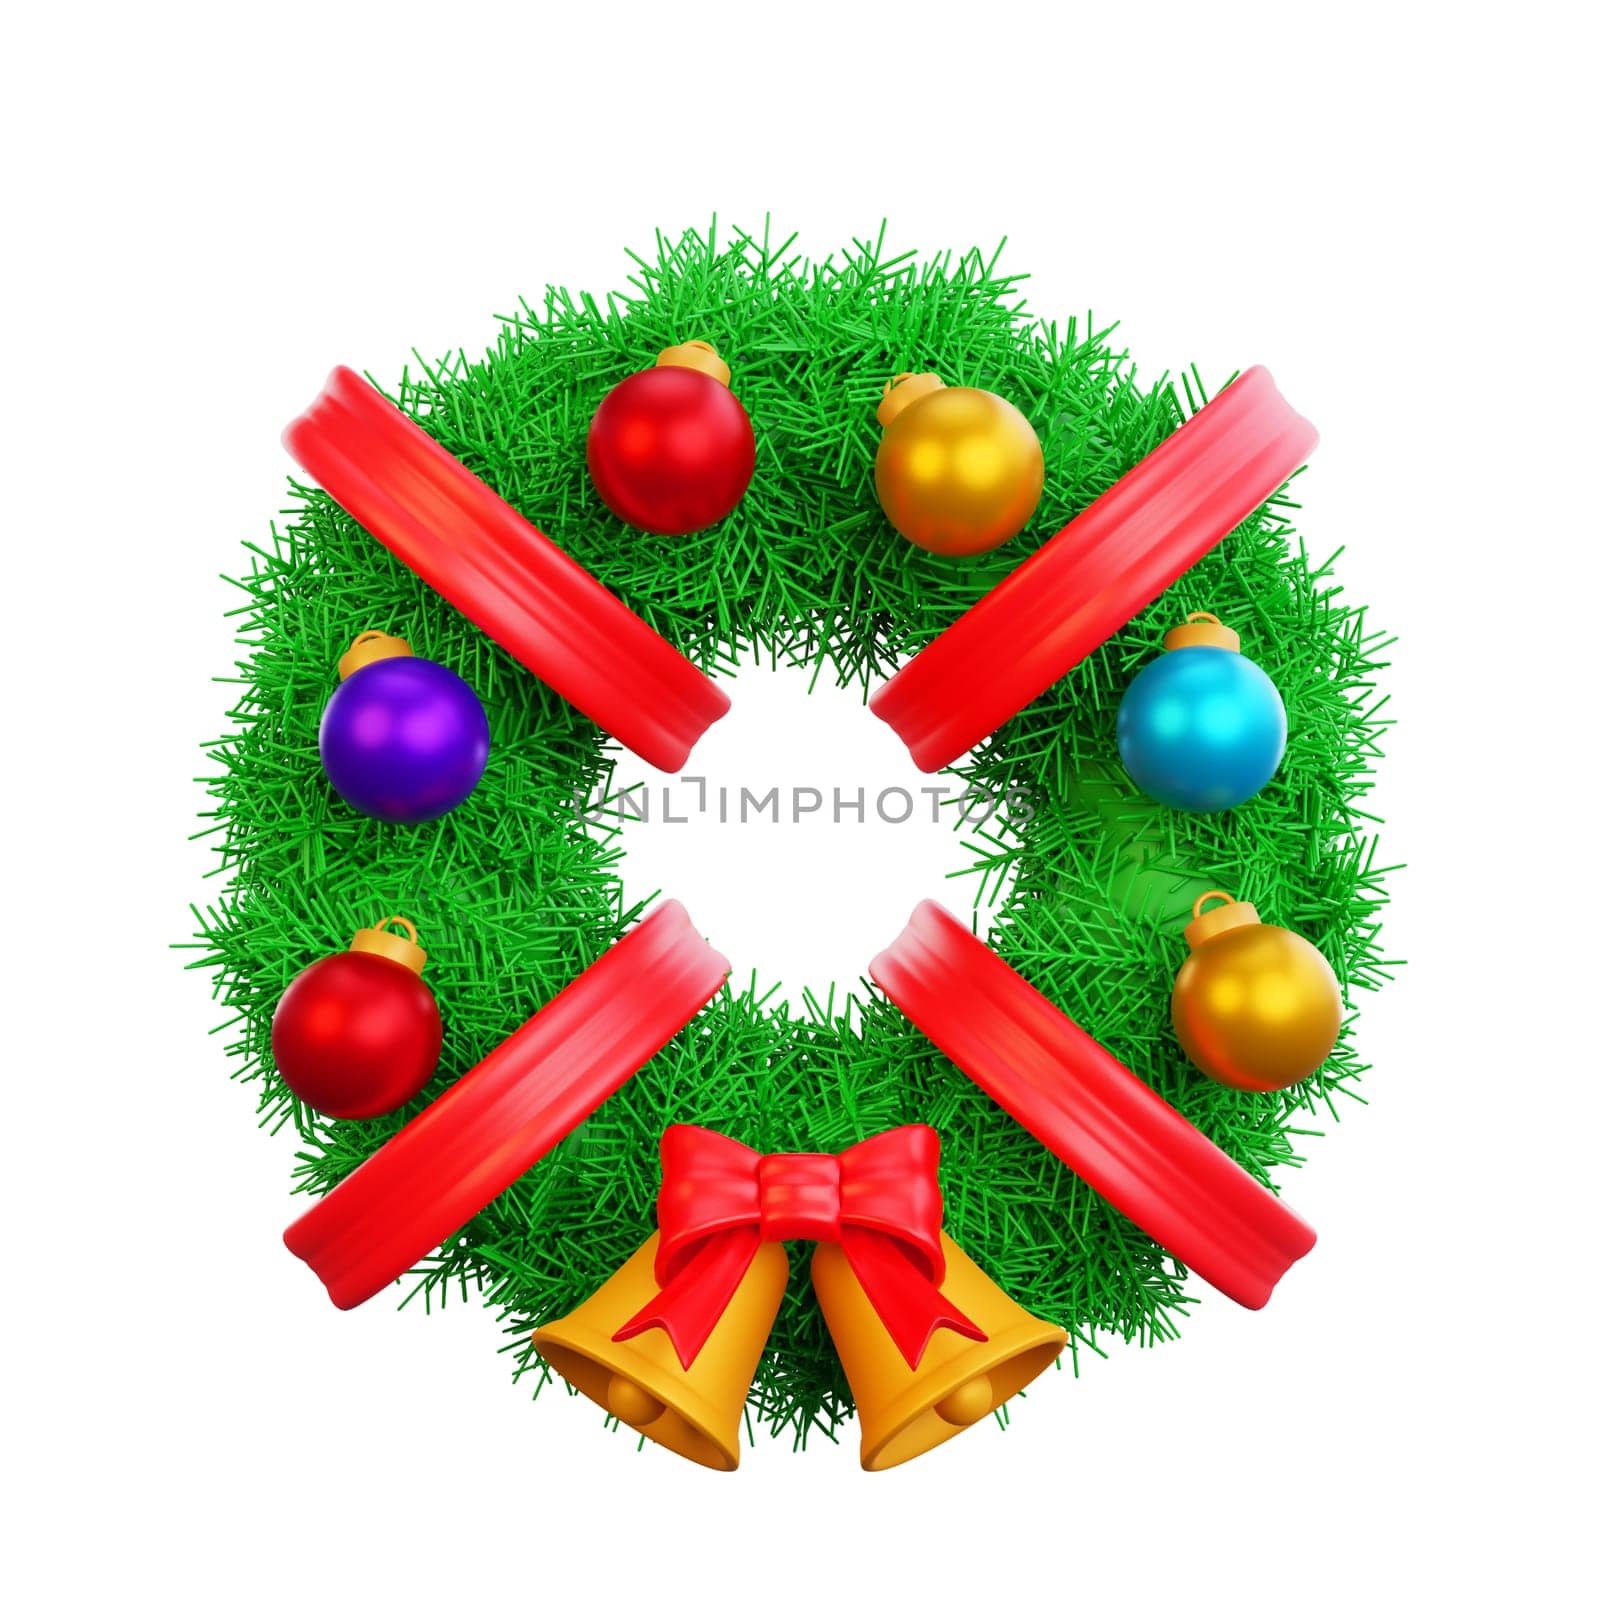 3D illustration of a Christmas wreath icon by Rahmat_Djayusman